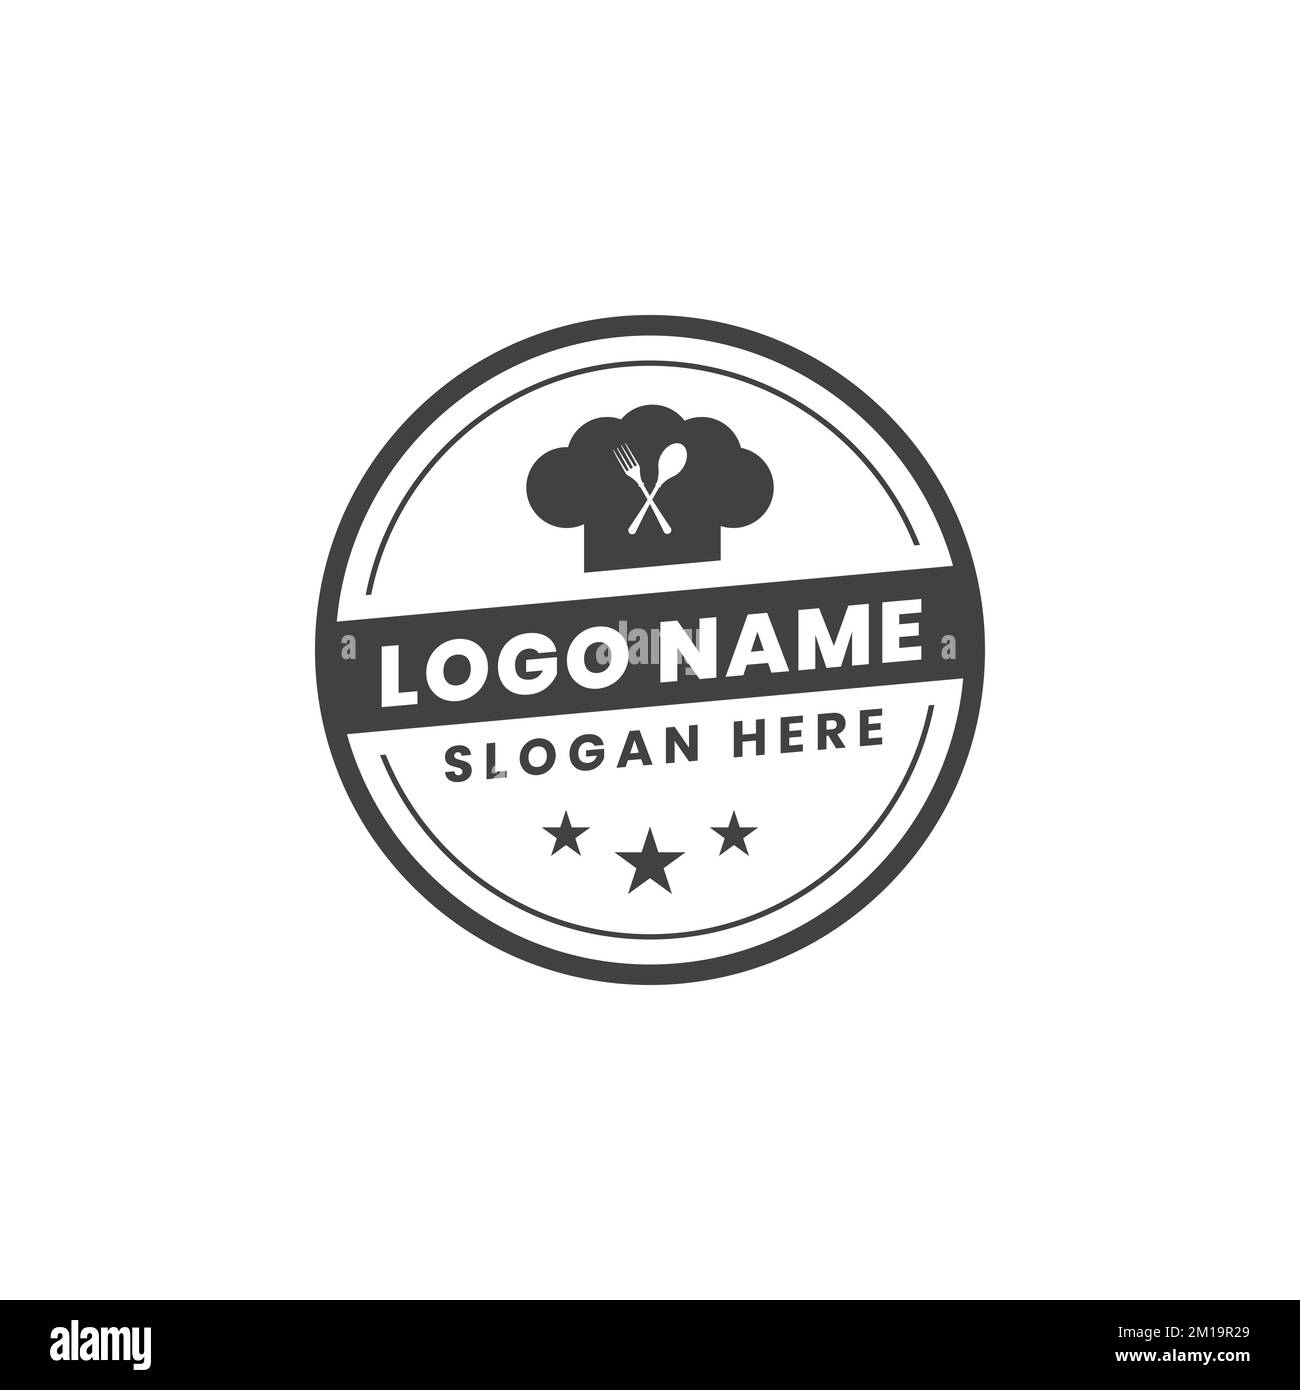 Restaurant Logo - Vector Illustration, Editable Graphic Design For Your Design. Stock Vector